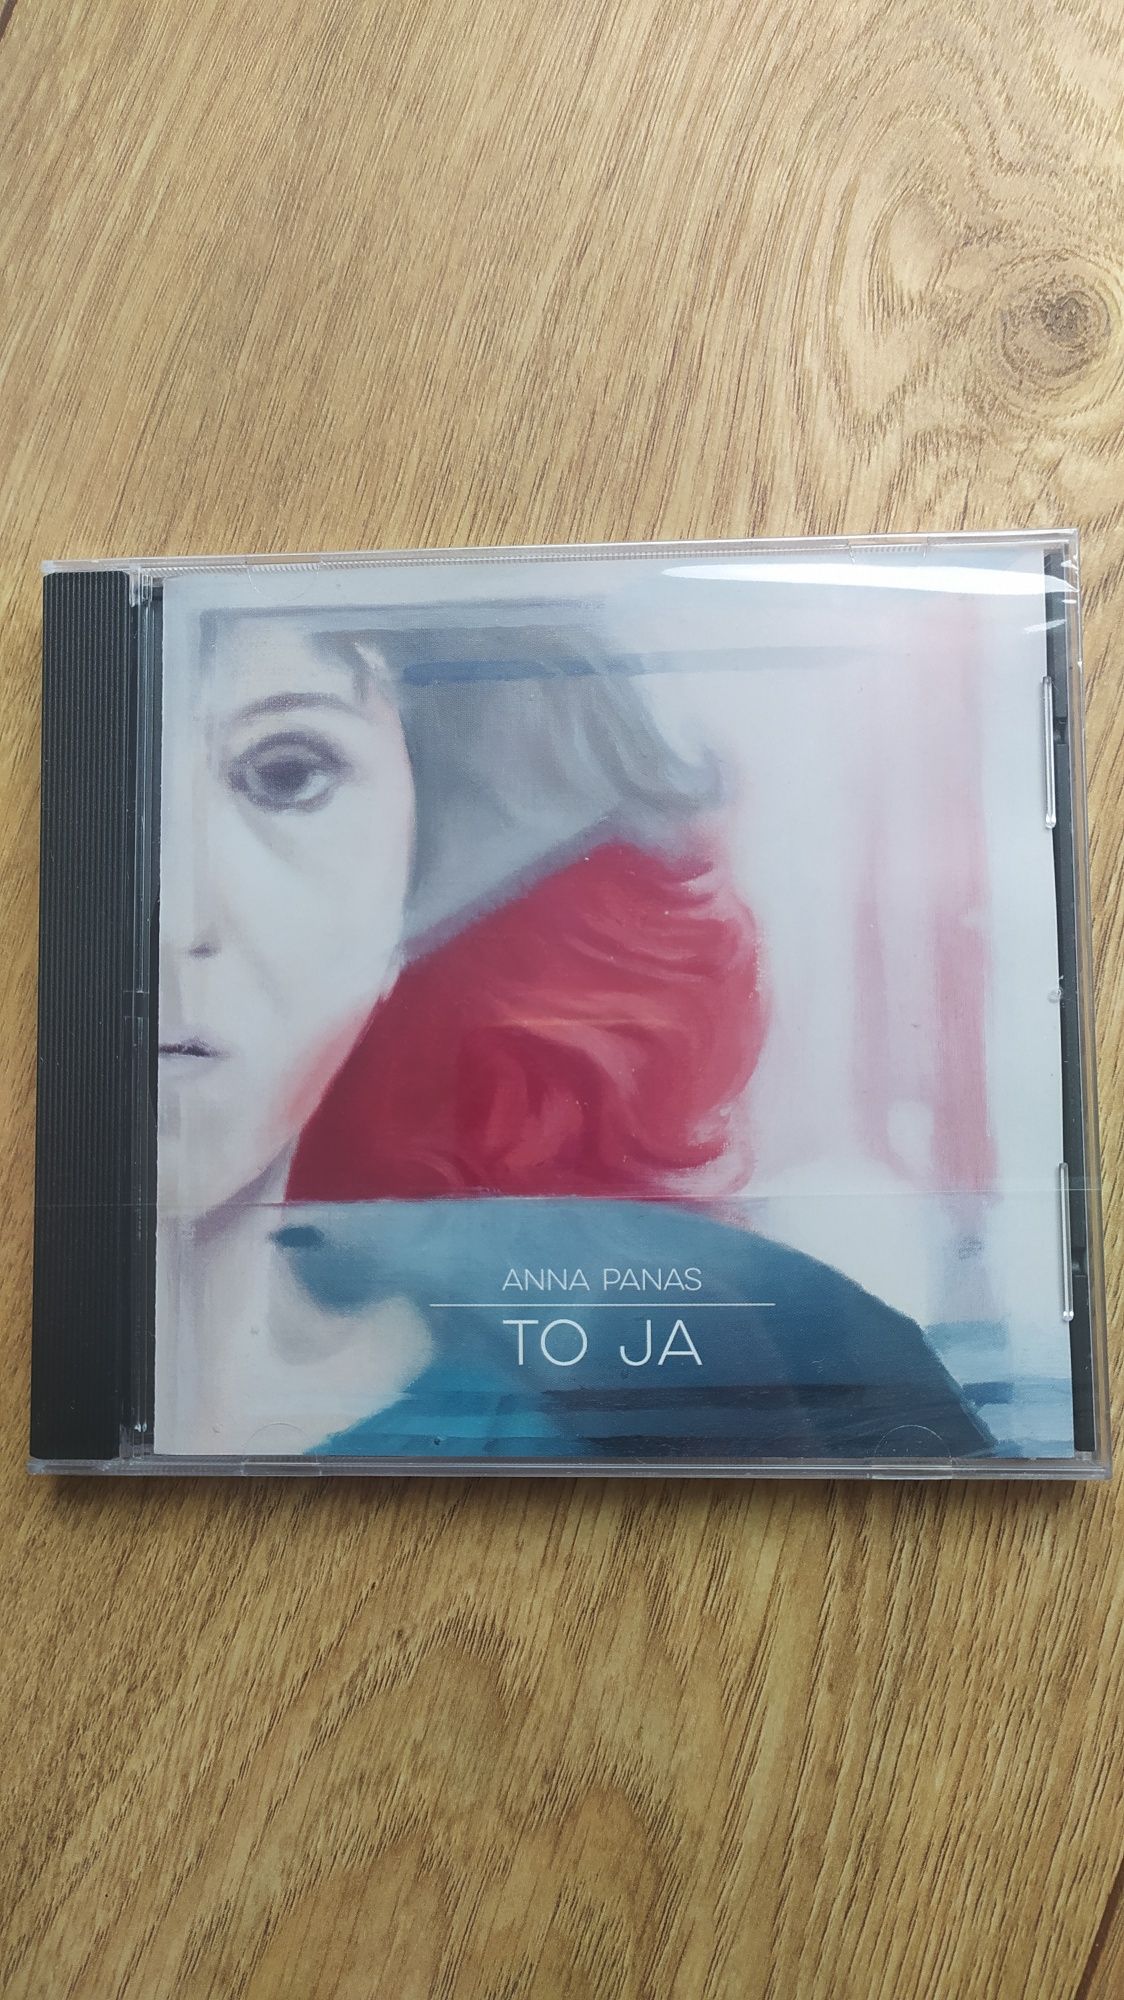 Płyta CD nowa Anna Panas "TO JA"